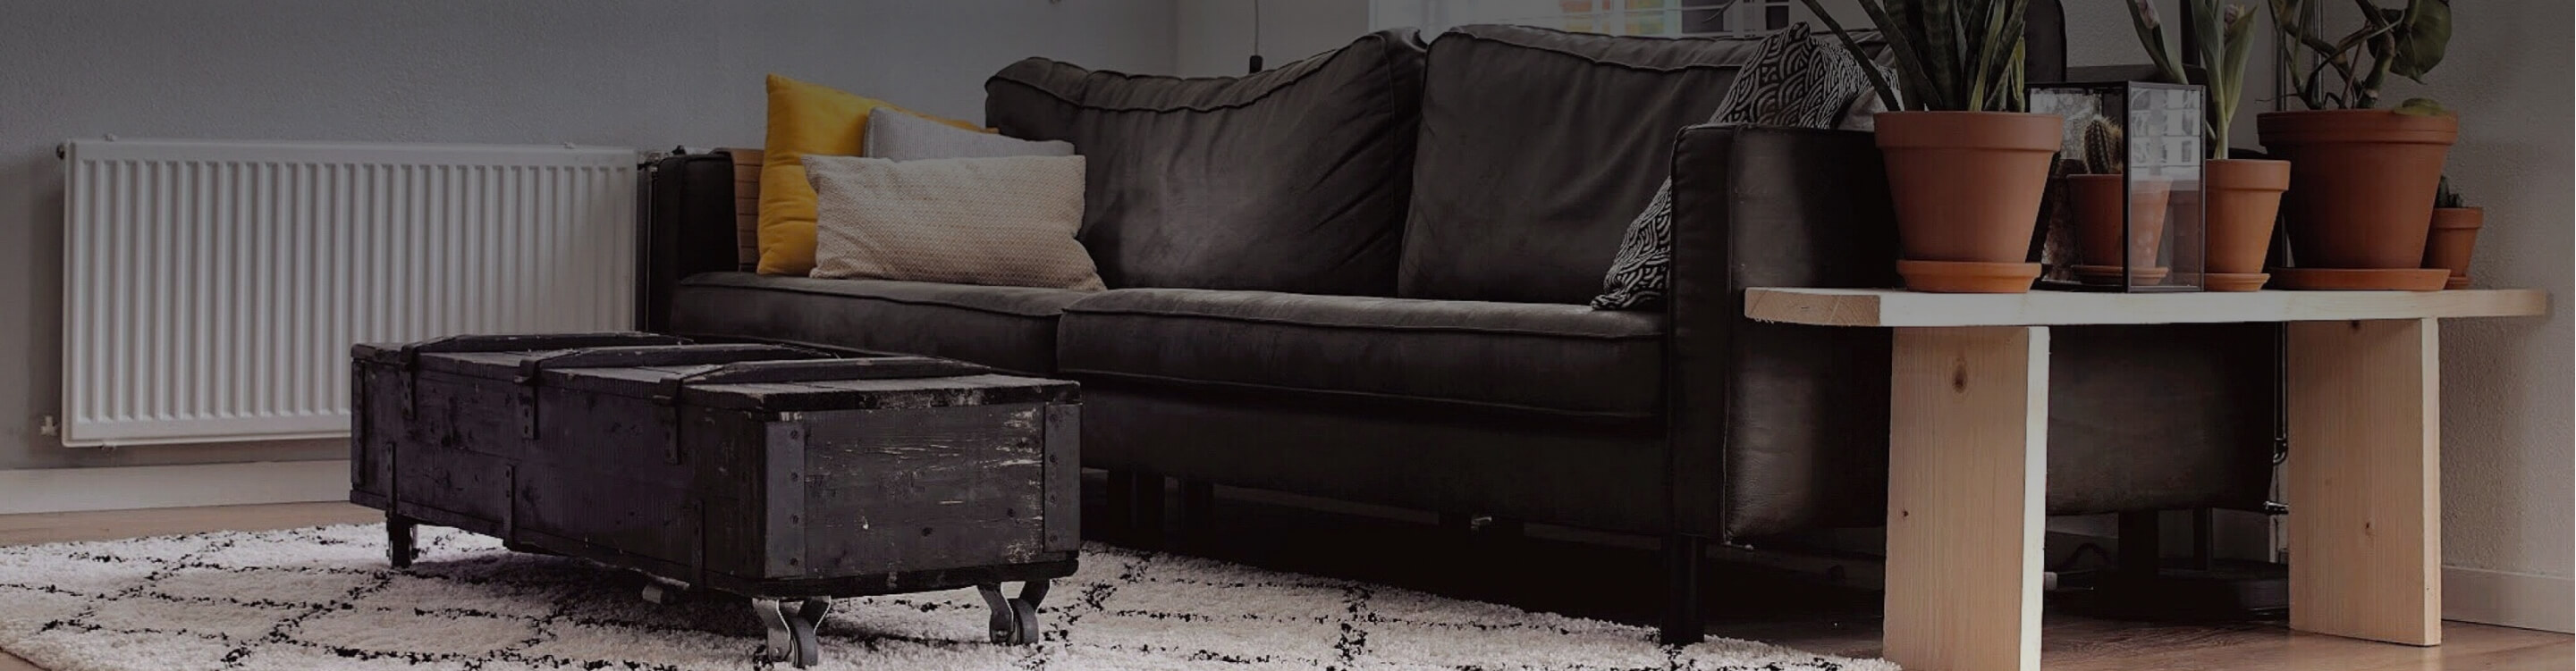 causal living room hardwood floors, casual area rug and comfy sofa